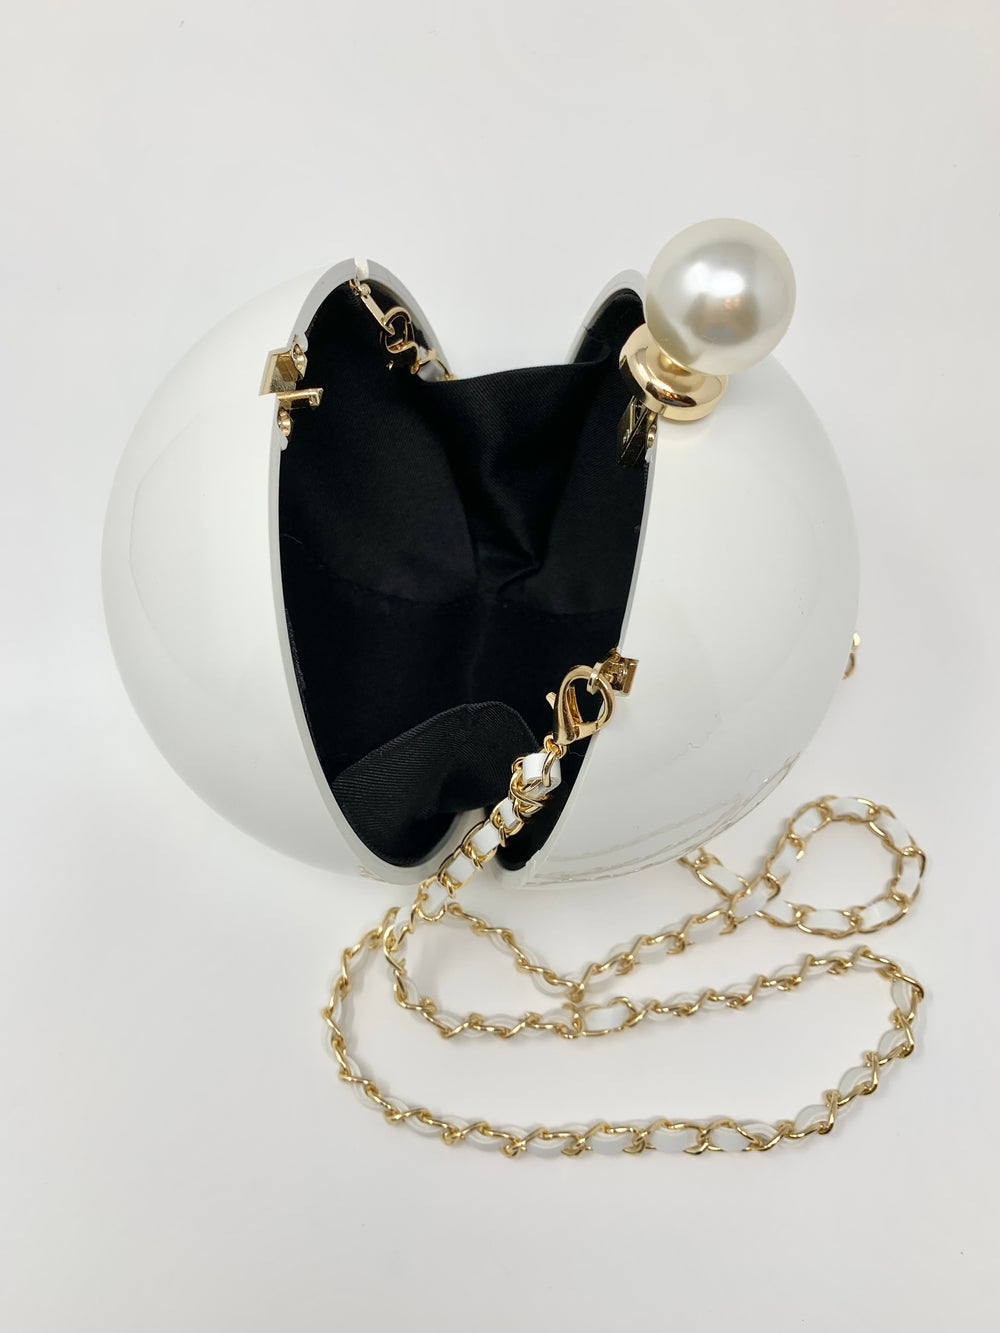 Buy Feminine Beautiful White Bead Necklace And Earring Jewellery